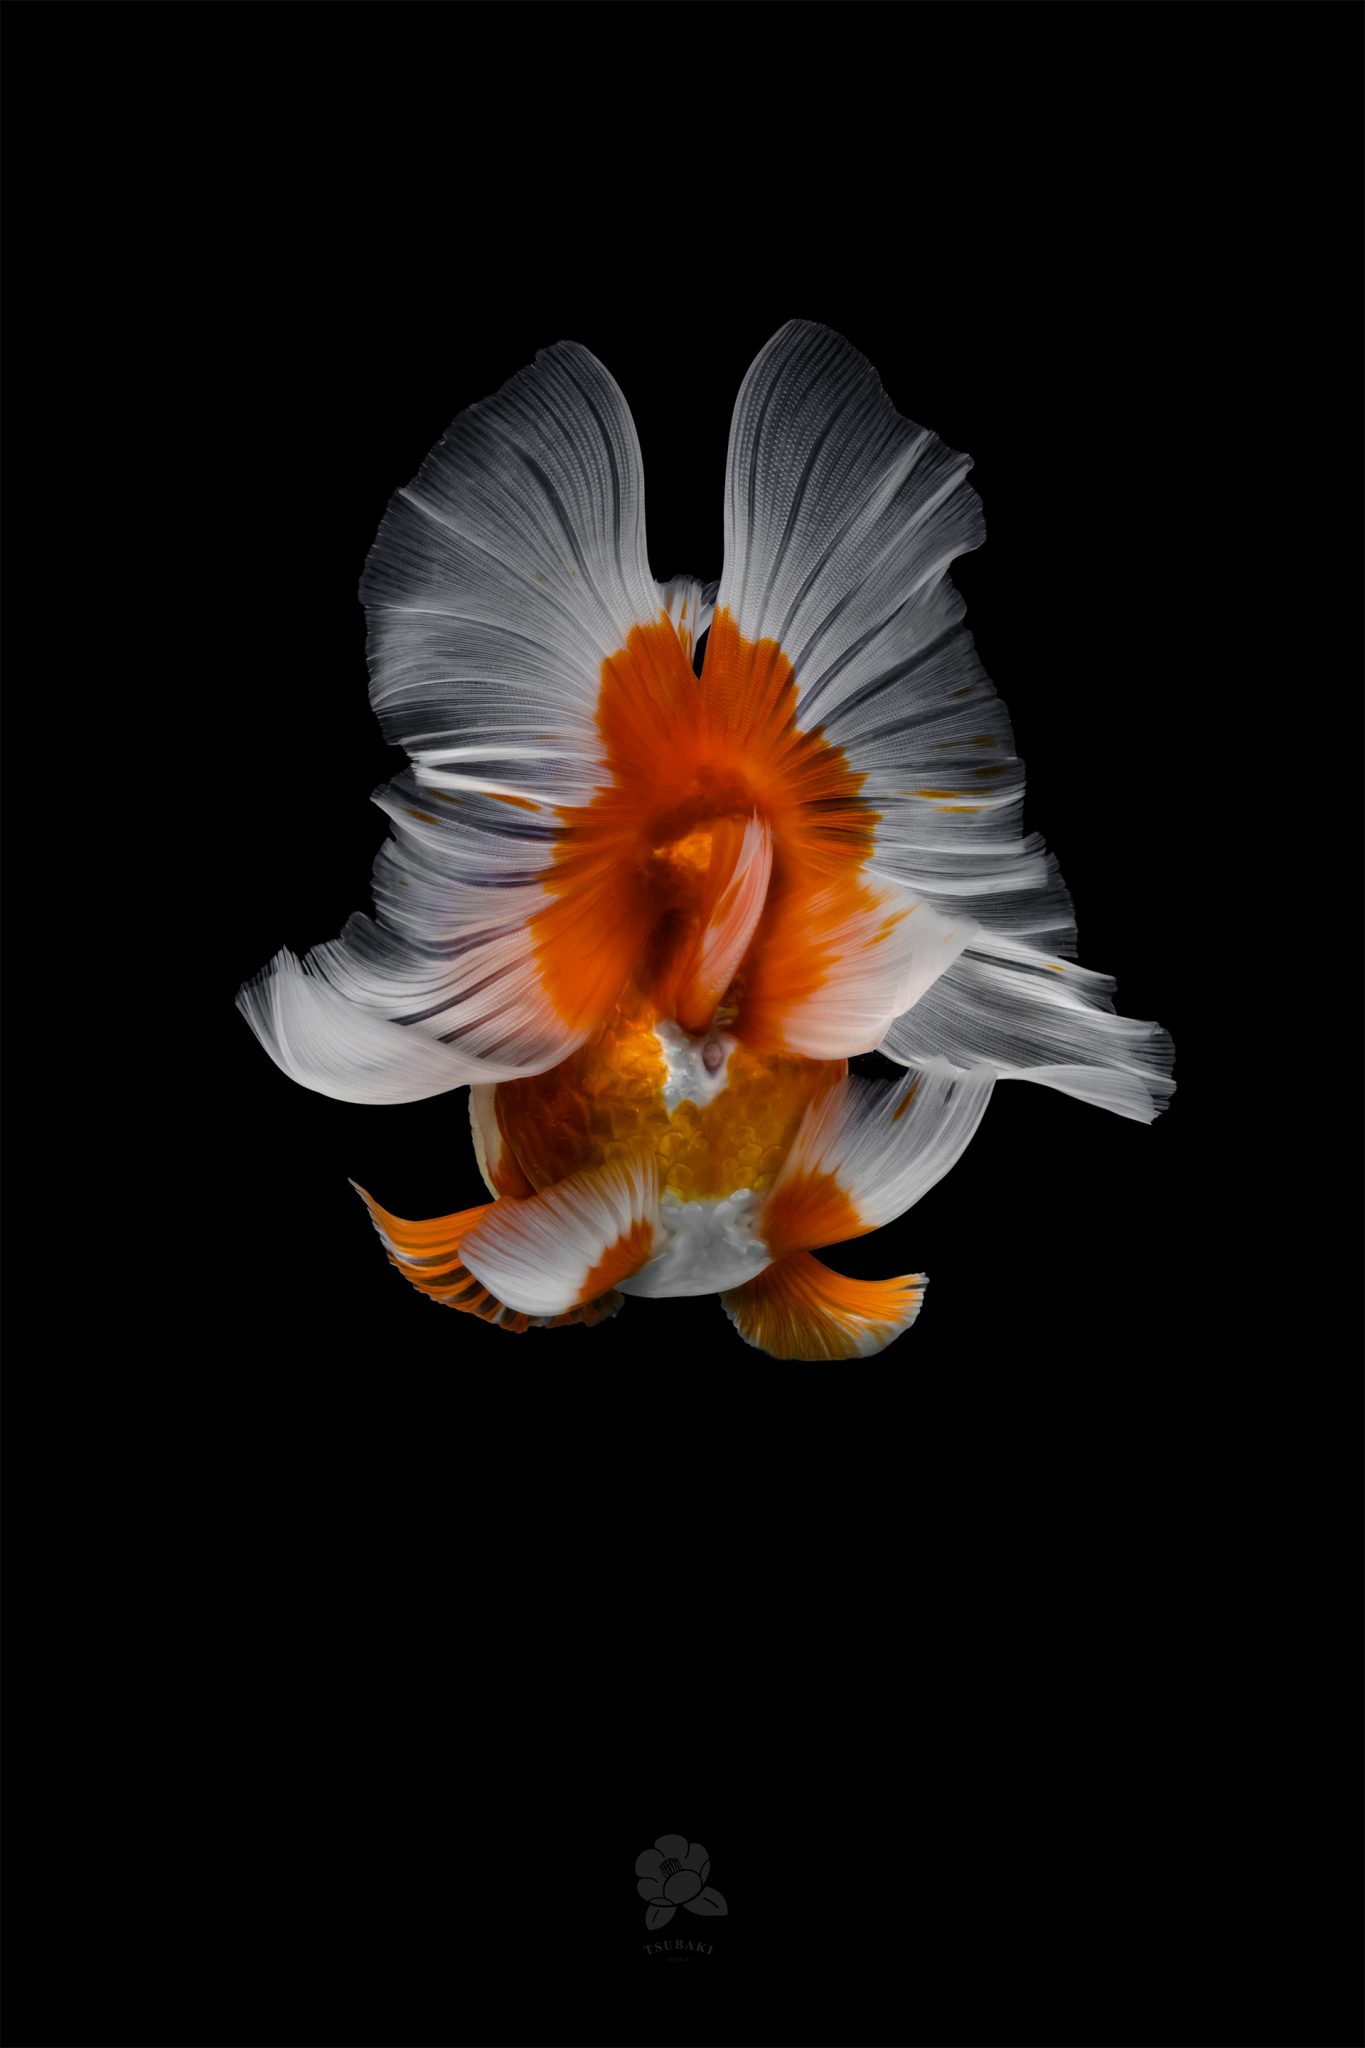 Captivating Goldfish Photos by Tsubaki Office | Daily design